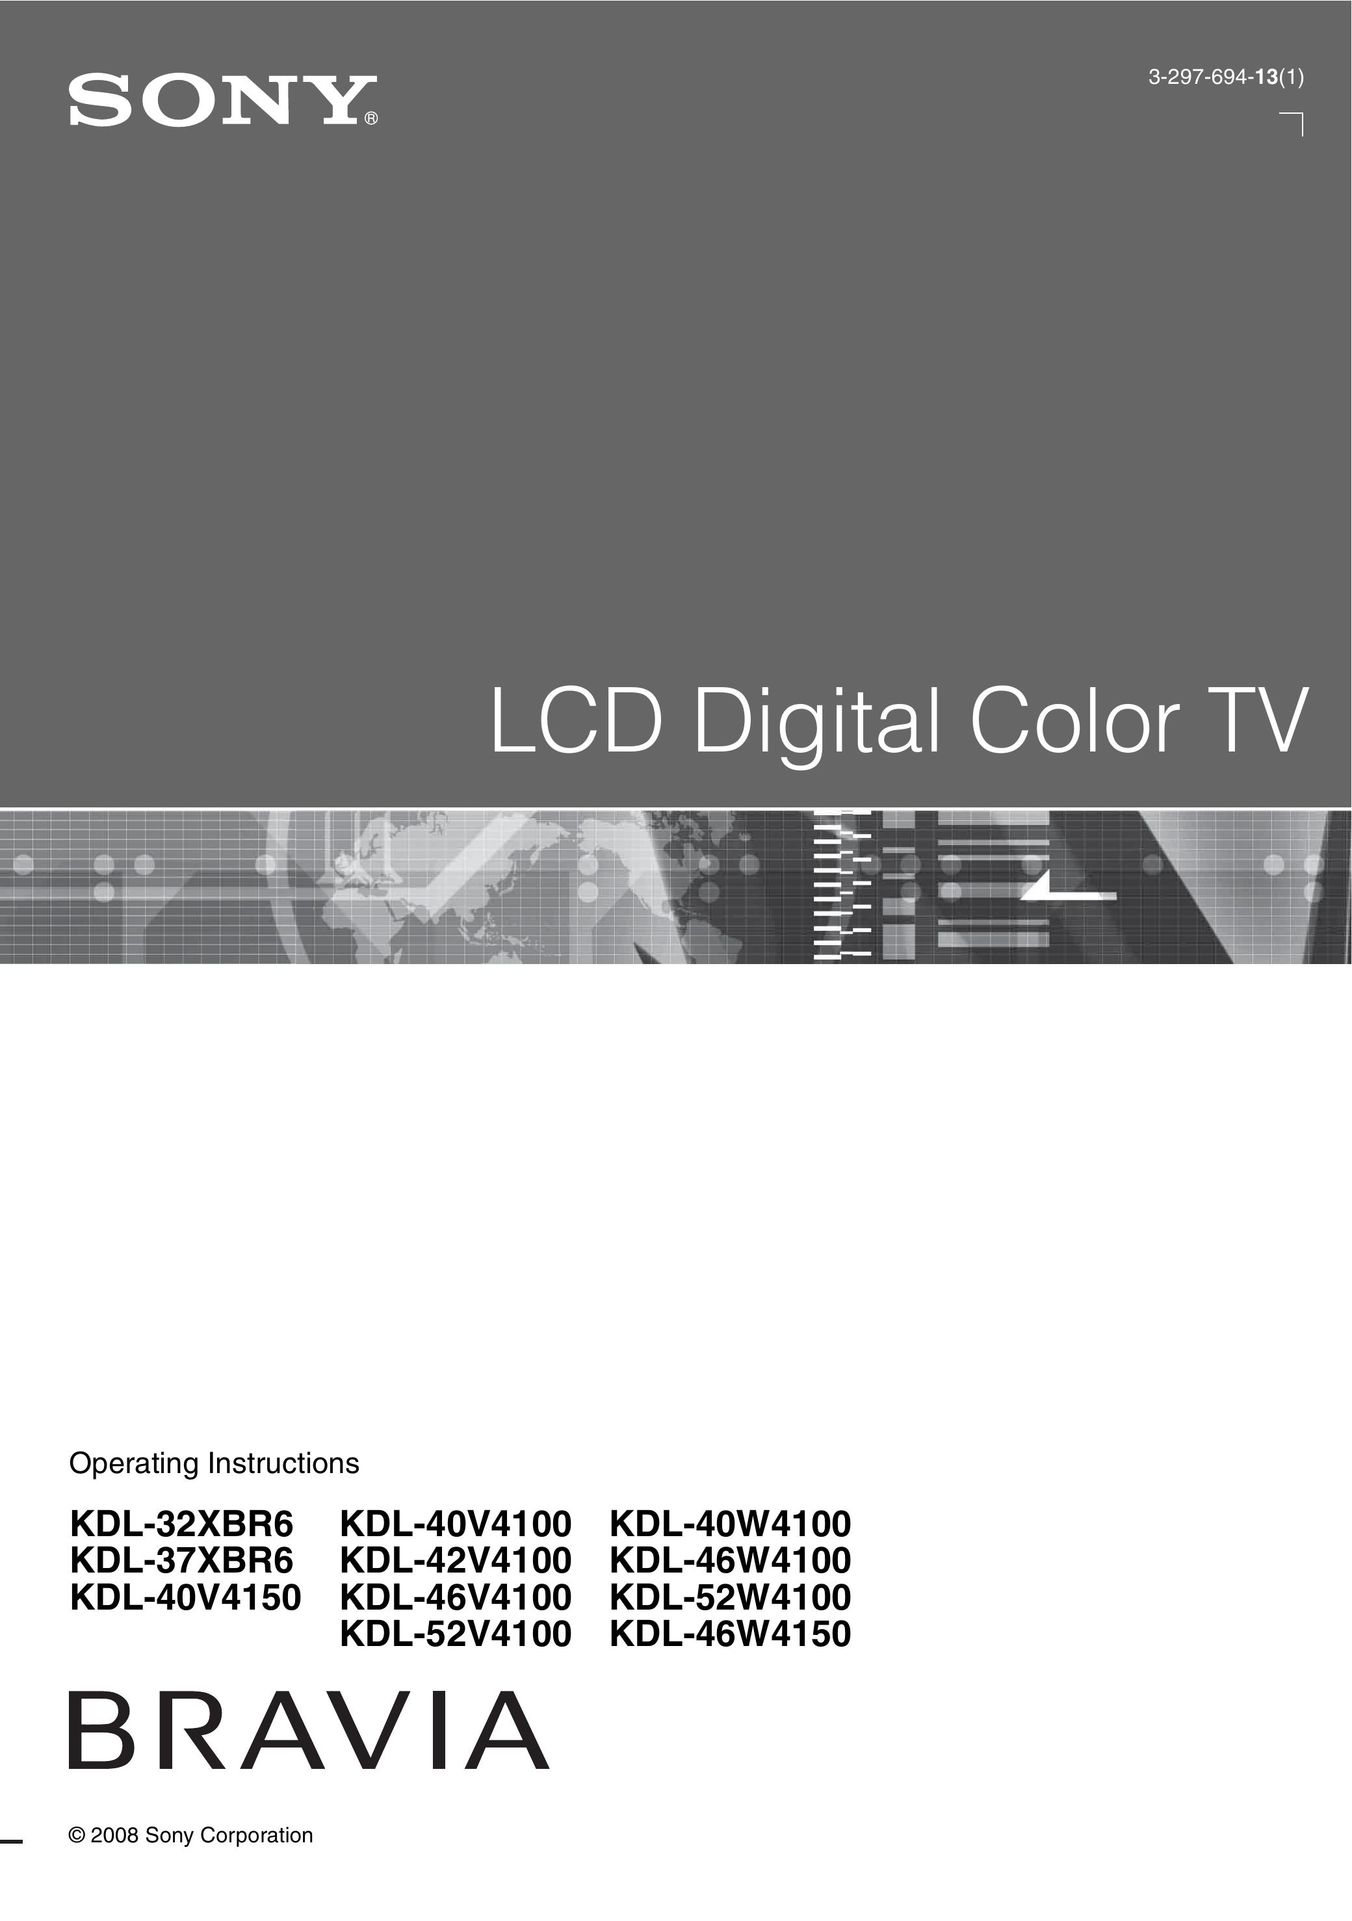 Sony KDL-52W4100 Beverage Dispenser User Manual